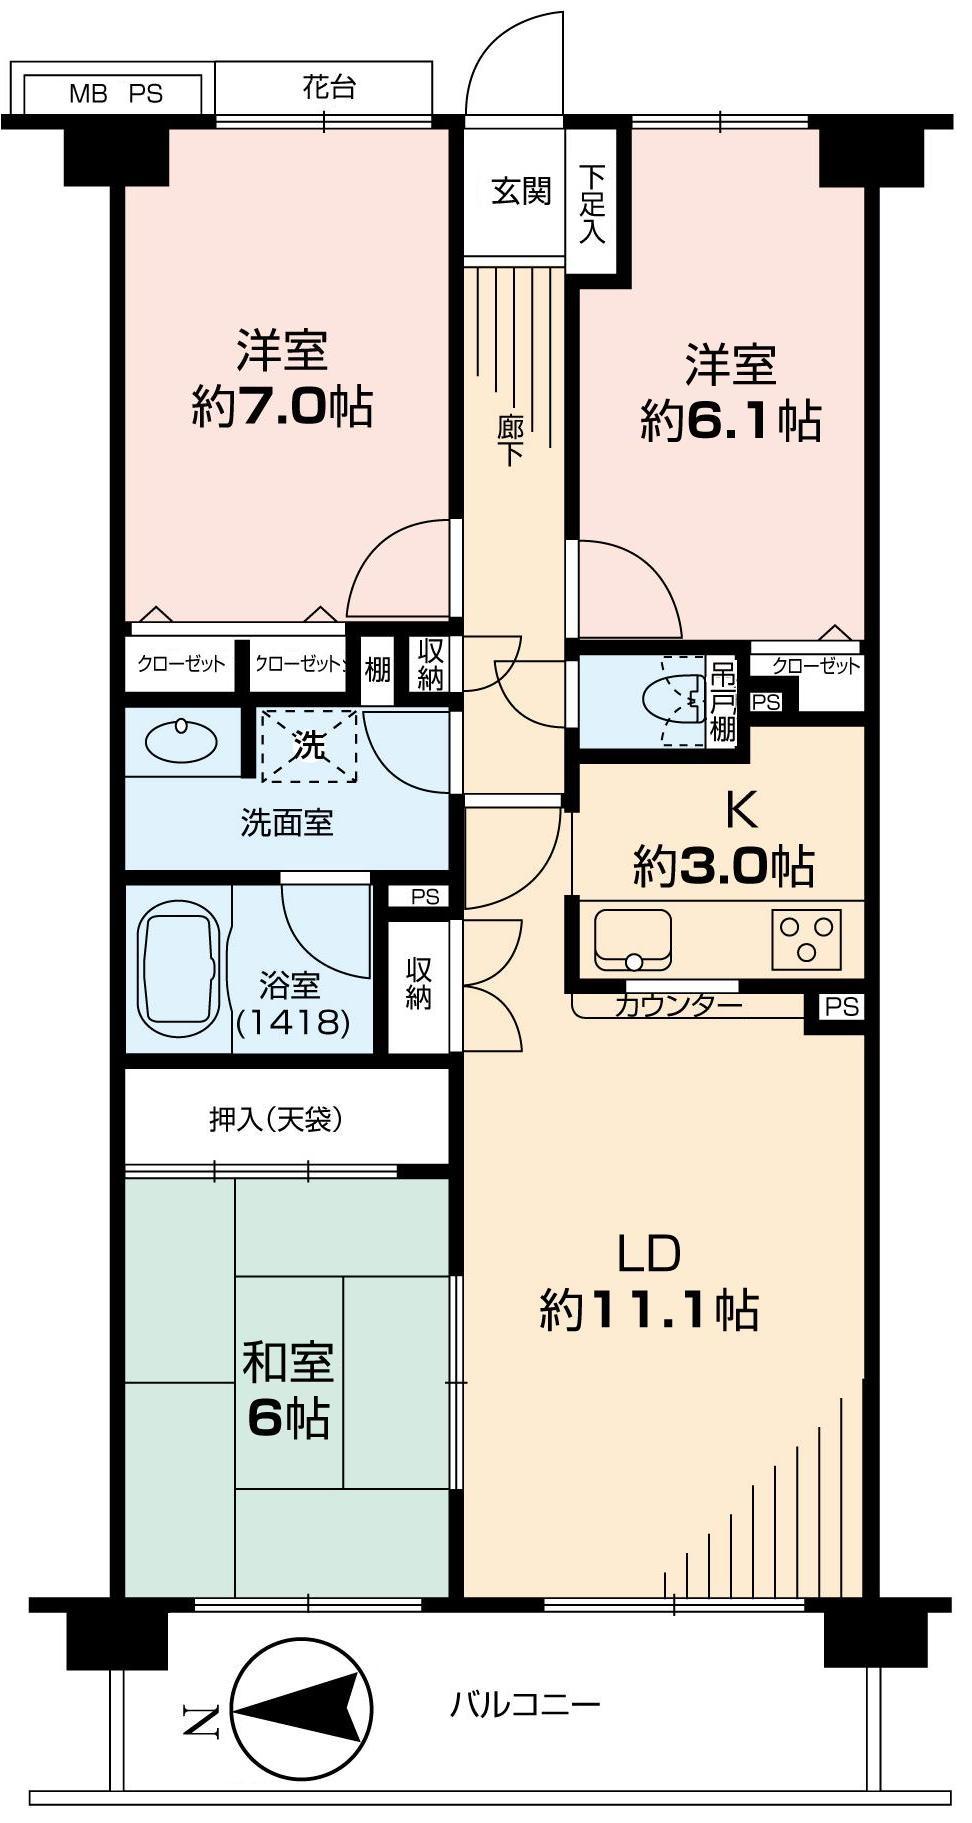 Floor plan. 3LDK, Price 21.5 million yen, Footprint 73.8 sq m , Balcony area 9.6 sq m